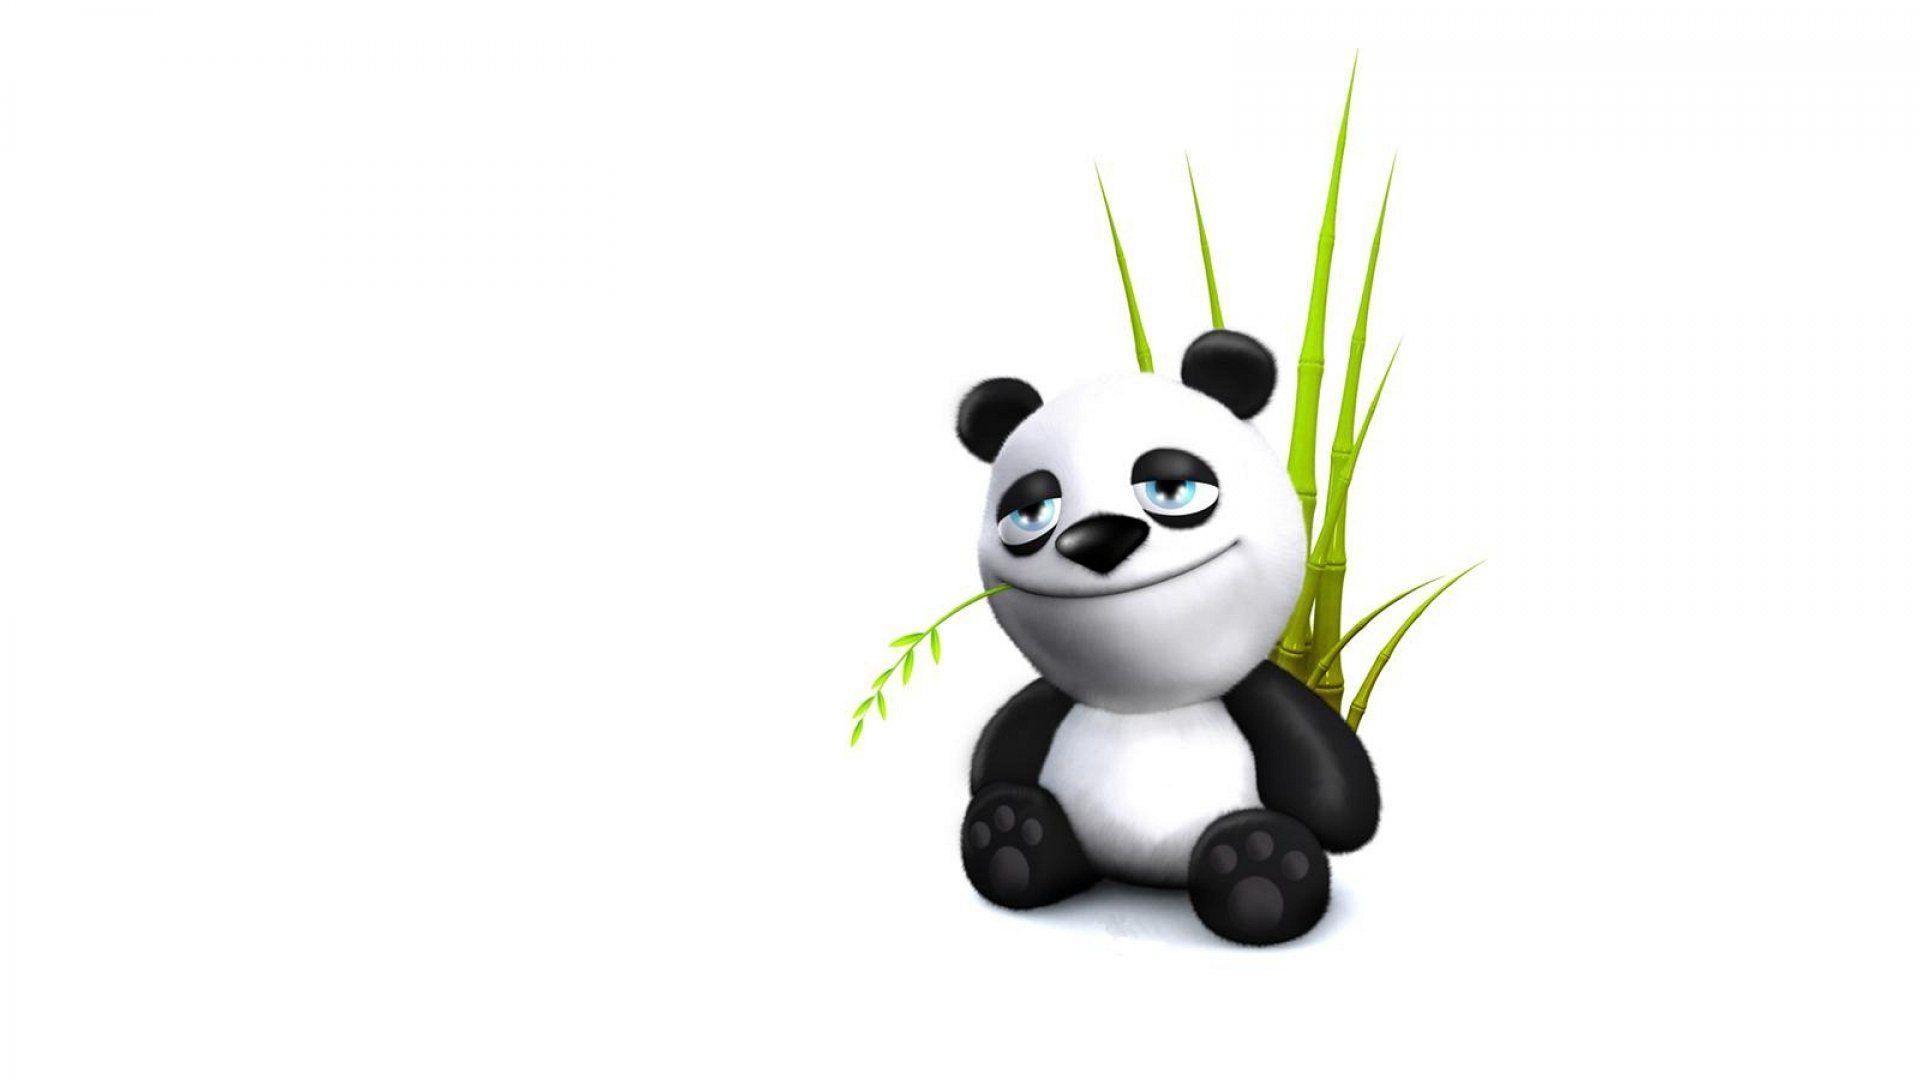 Wallpaper.wiki Funny 3D Cartoon Panda Background PIC WPD003318